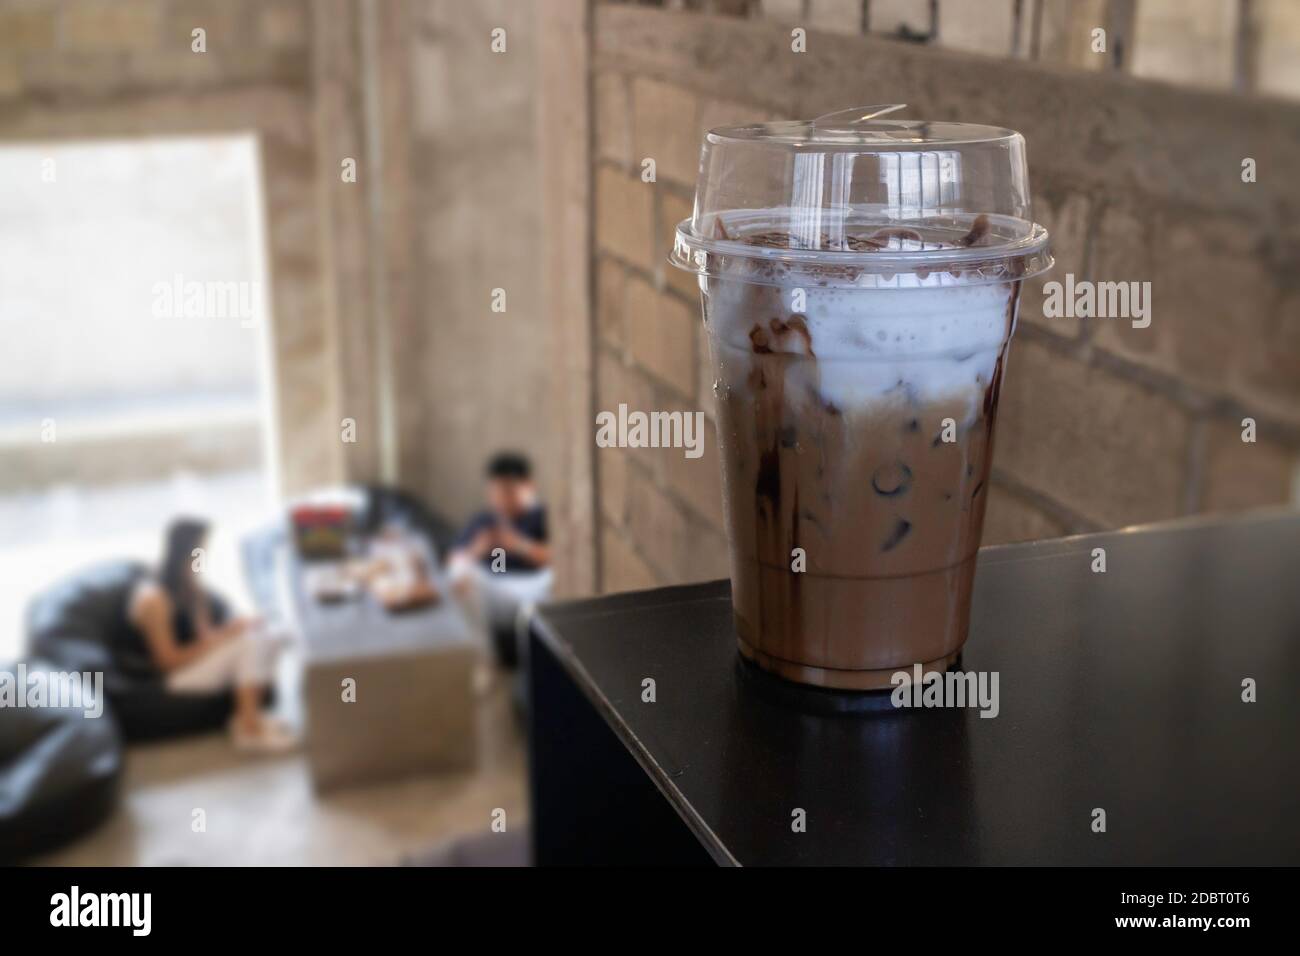 https://c8.alamy.com/comp/2DBT0T6/iced-coffee-mocha-in-takeaway-cup-stock-photo-2DBT0T6.jpg